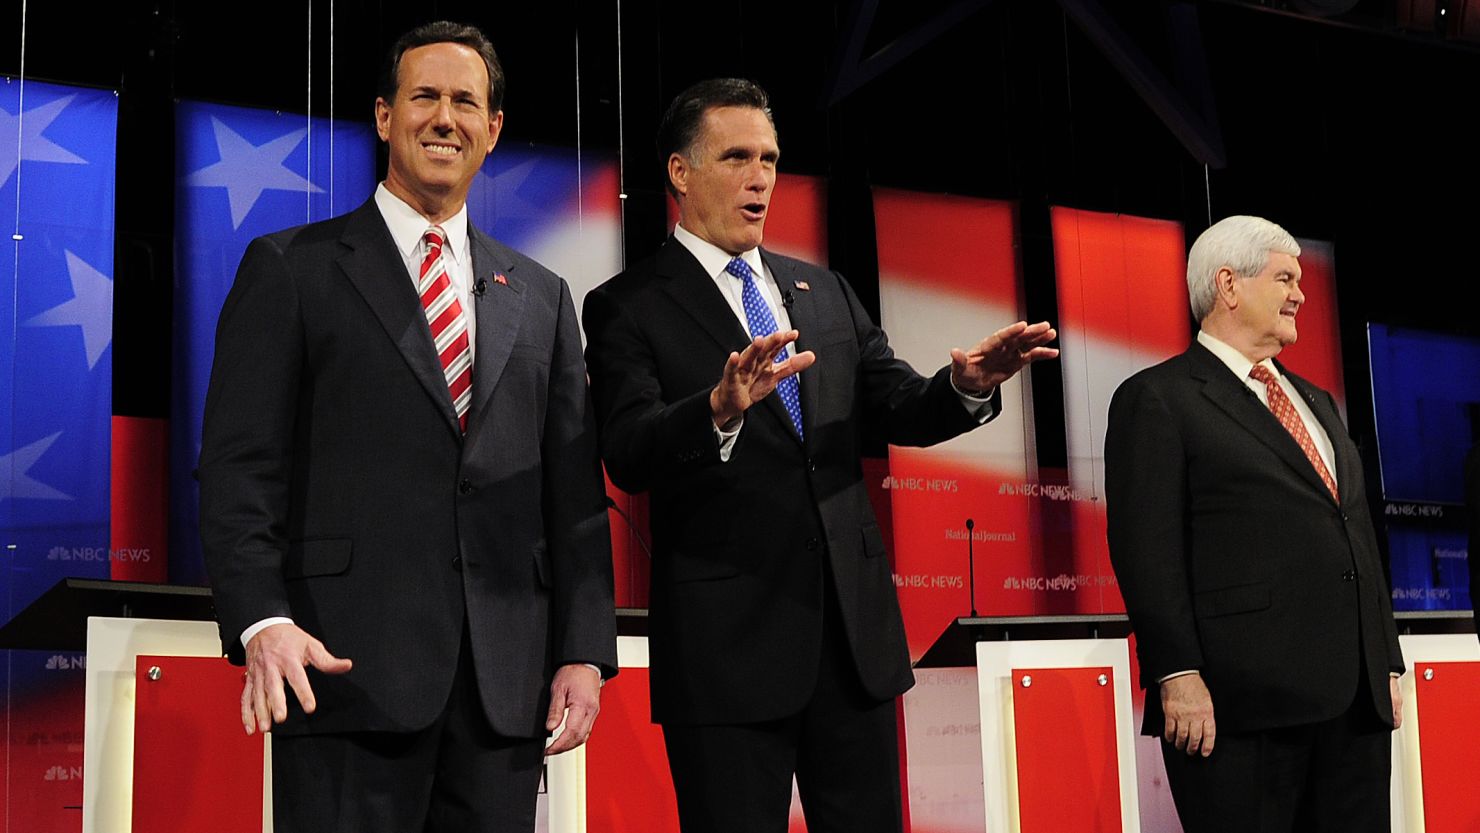 Republican presidential hopefuls Rick Santorum, Mitt Romney and Newt Gingrich at the Republican debate in Florida.